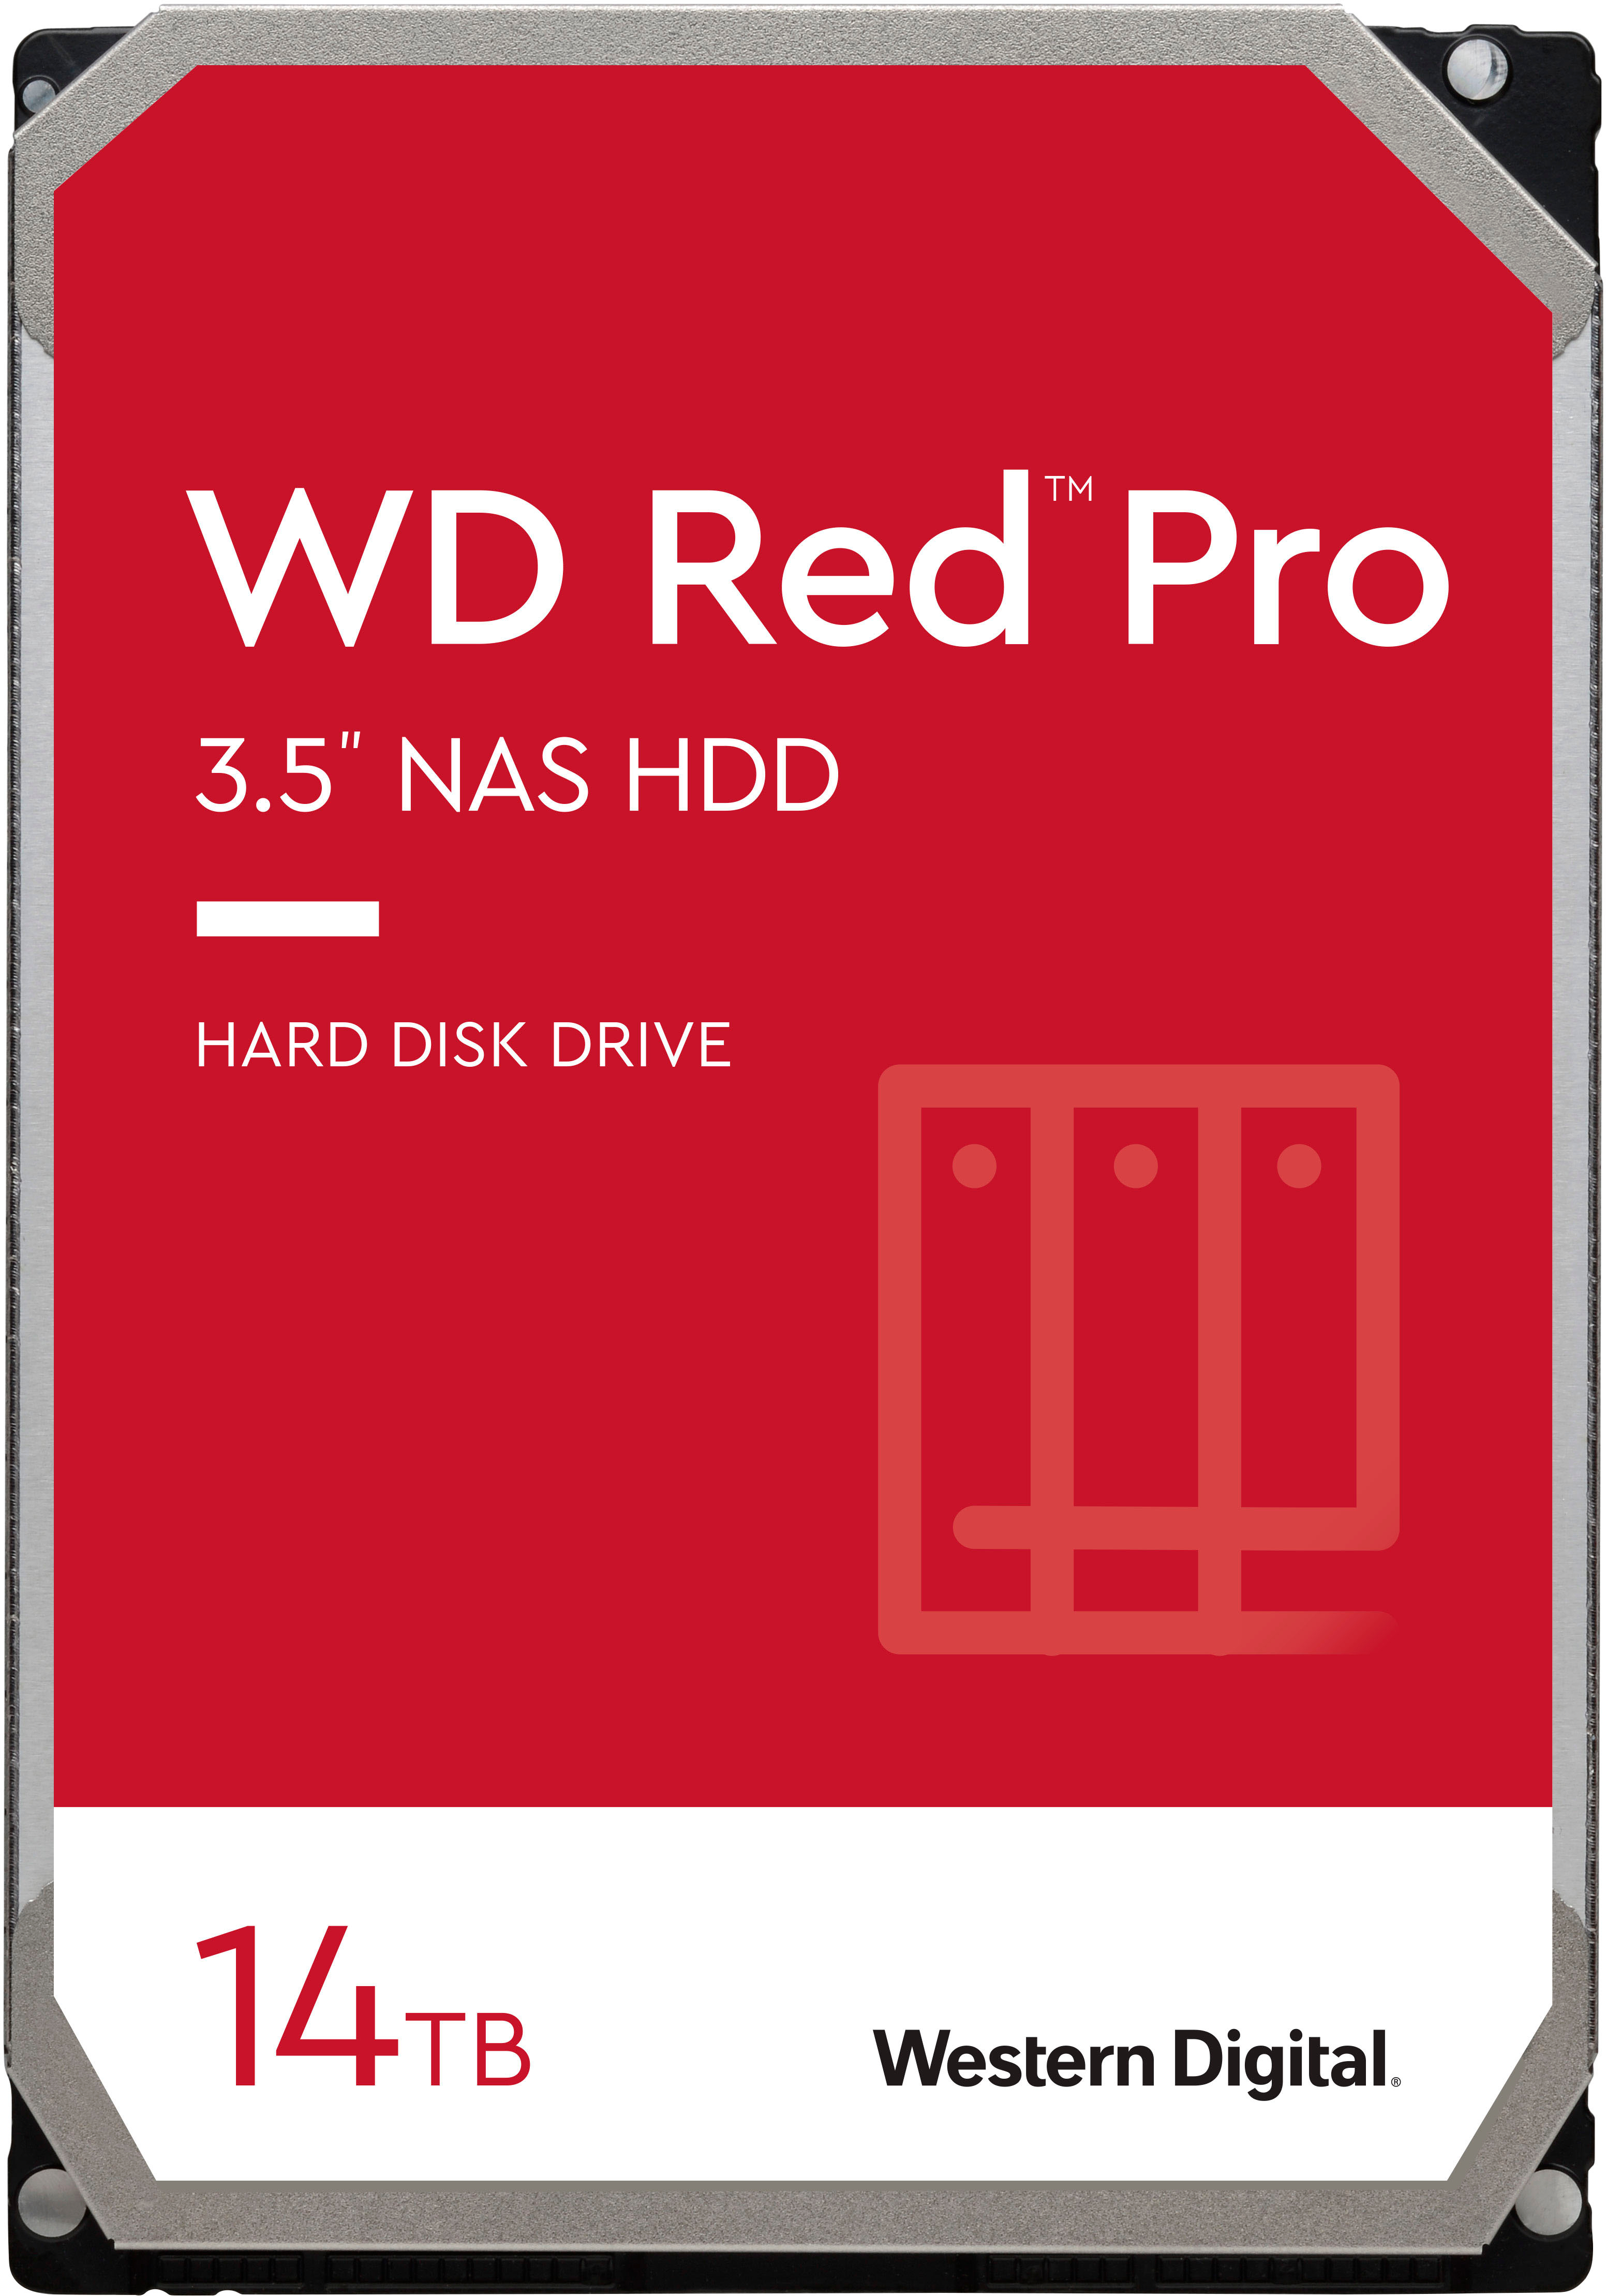 WD Red Pro 14TB Internal SATA NAS Hard Drive for Desktops